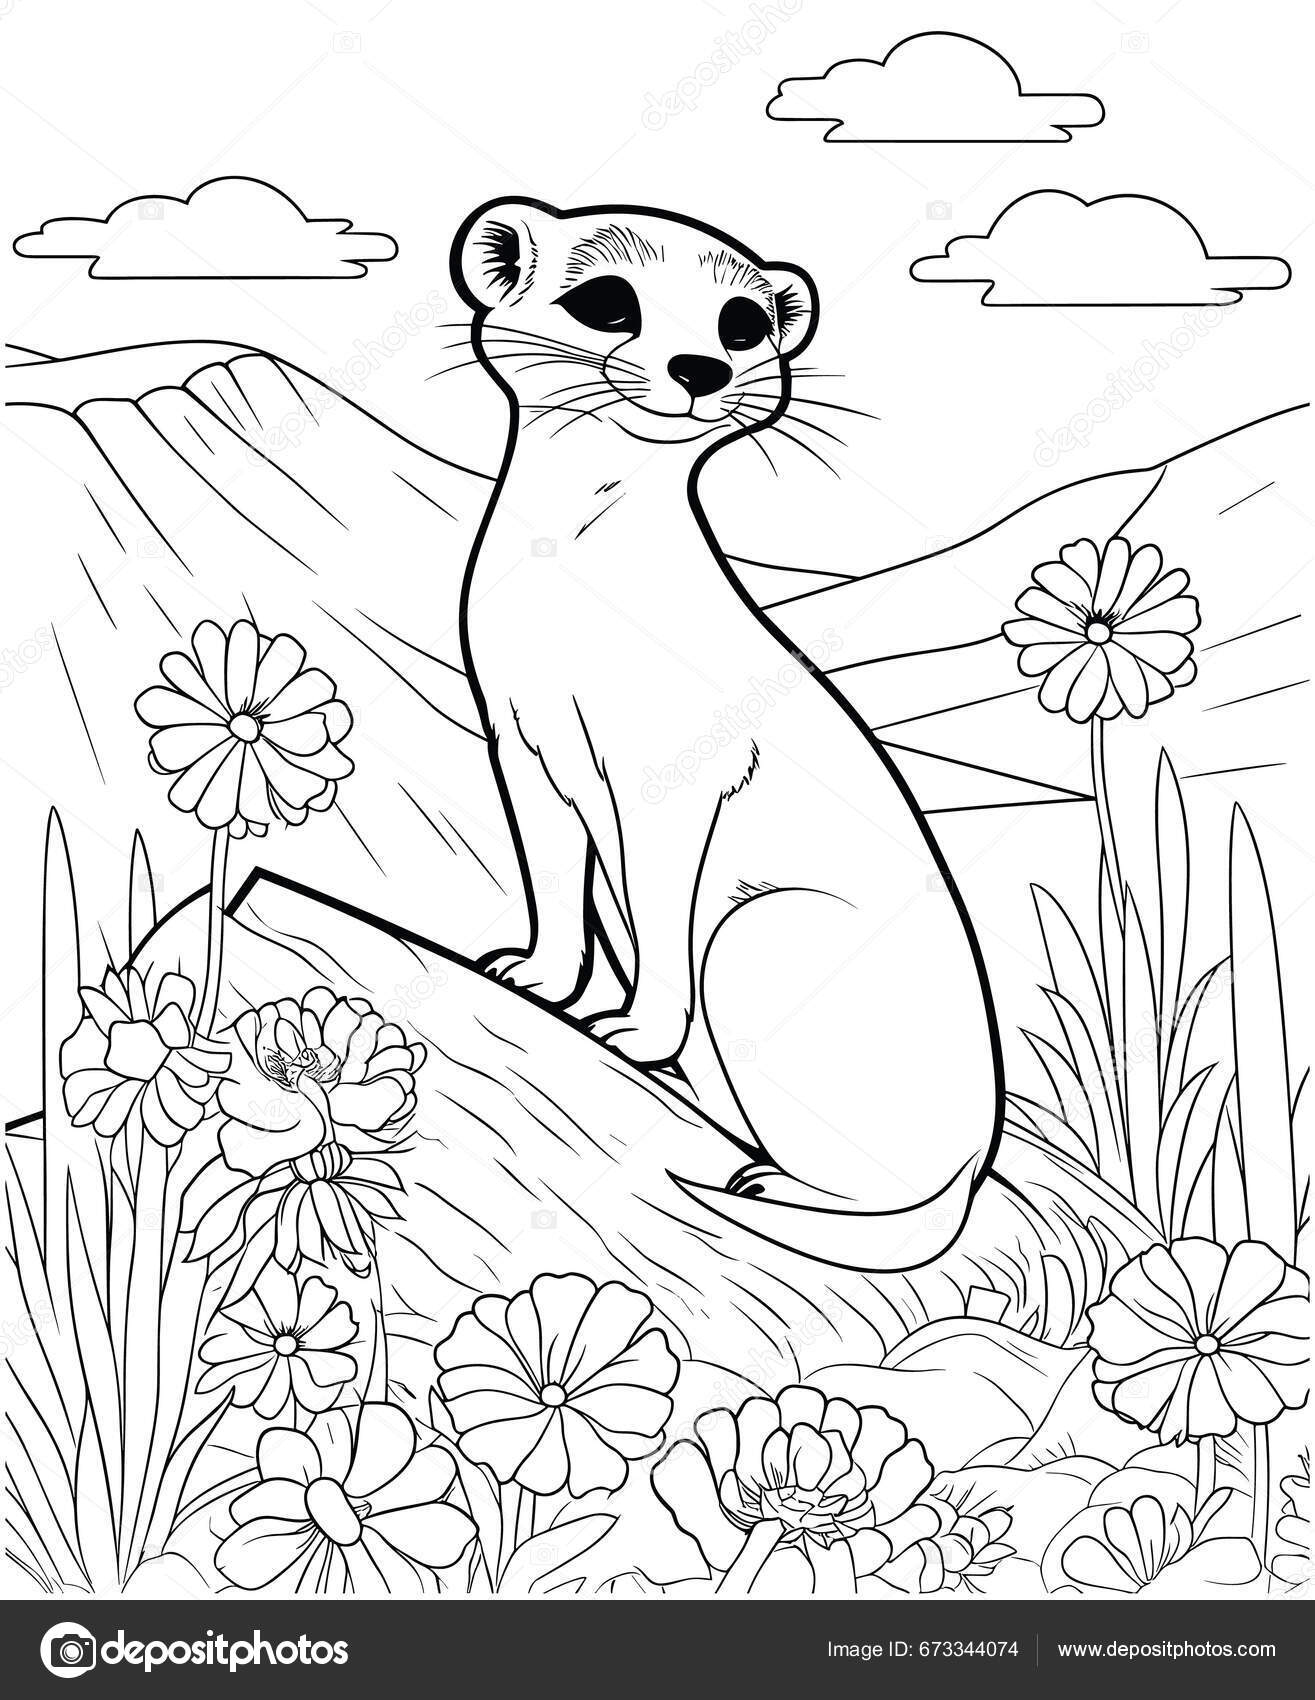 Desenhos para adultos de panda para colorir - Imprimir A4